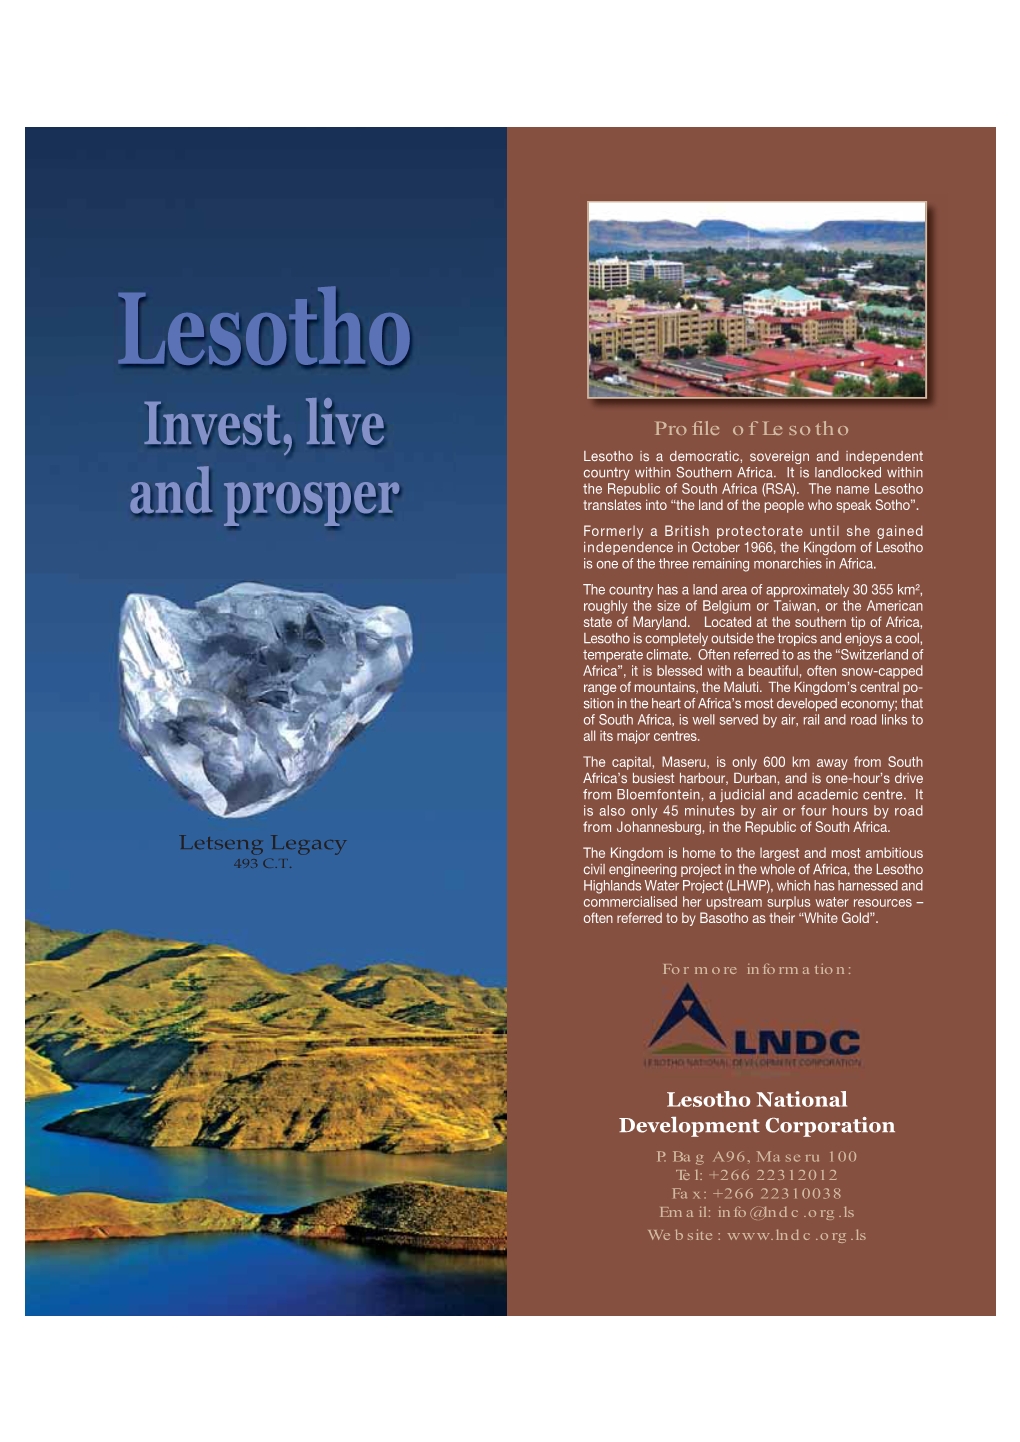 Lesotho National Development Corporation